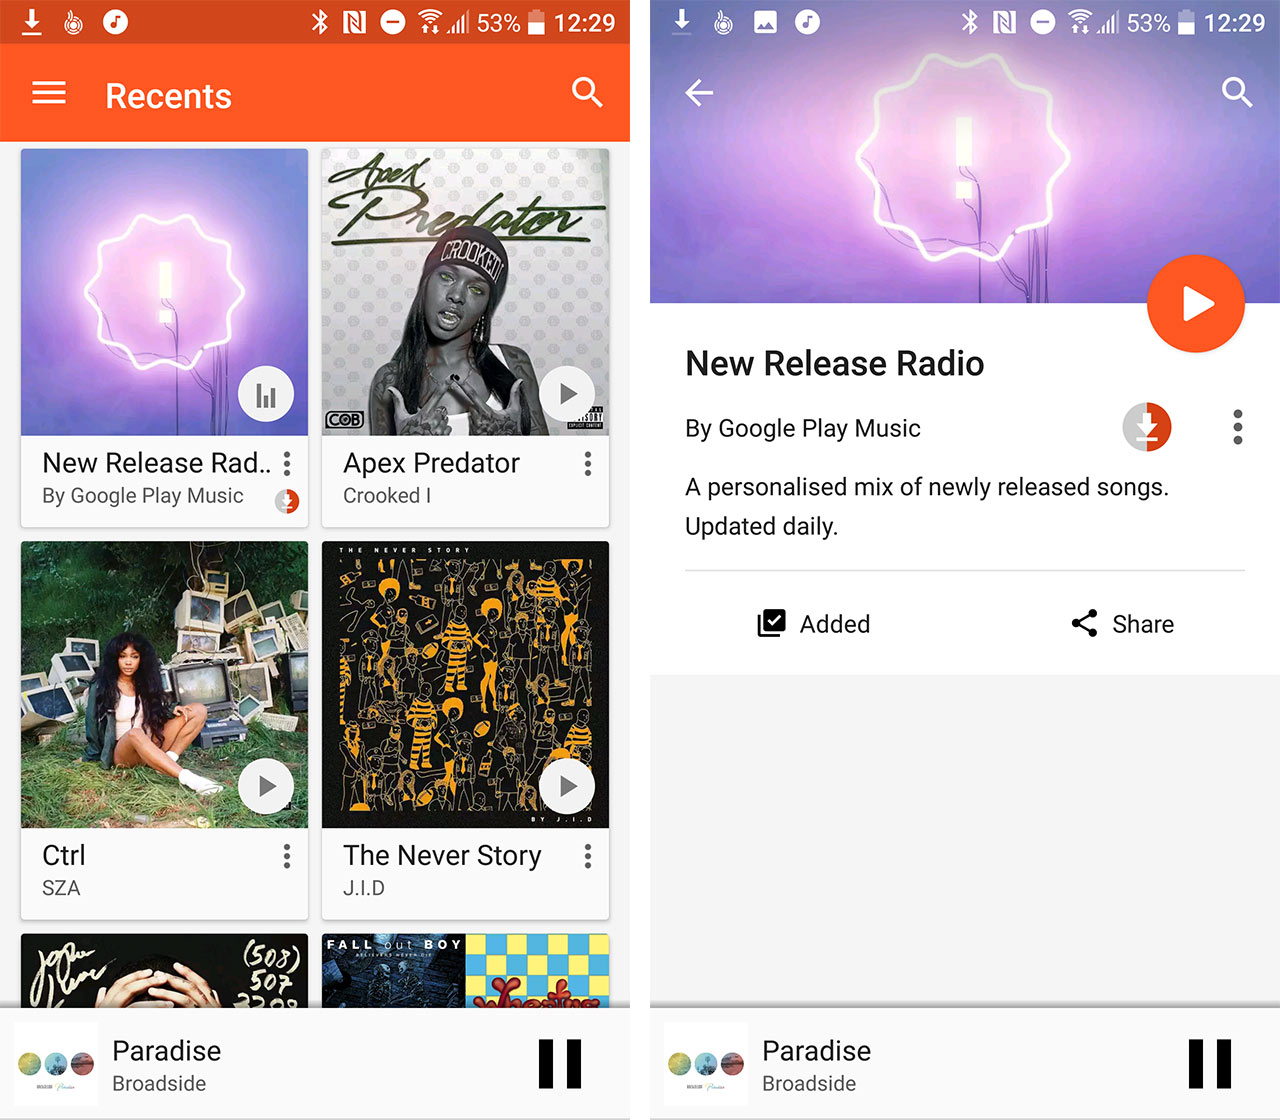 New Release Radio playlist on Google Play Music